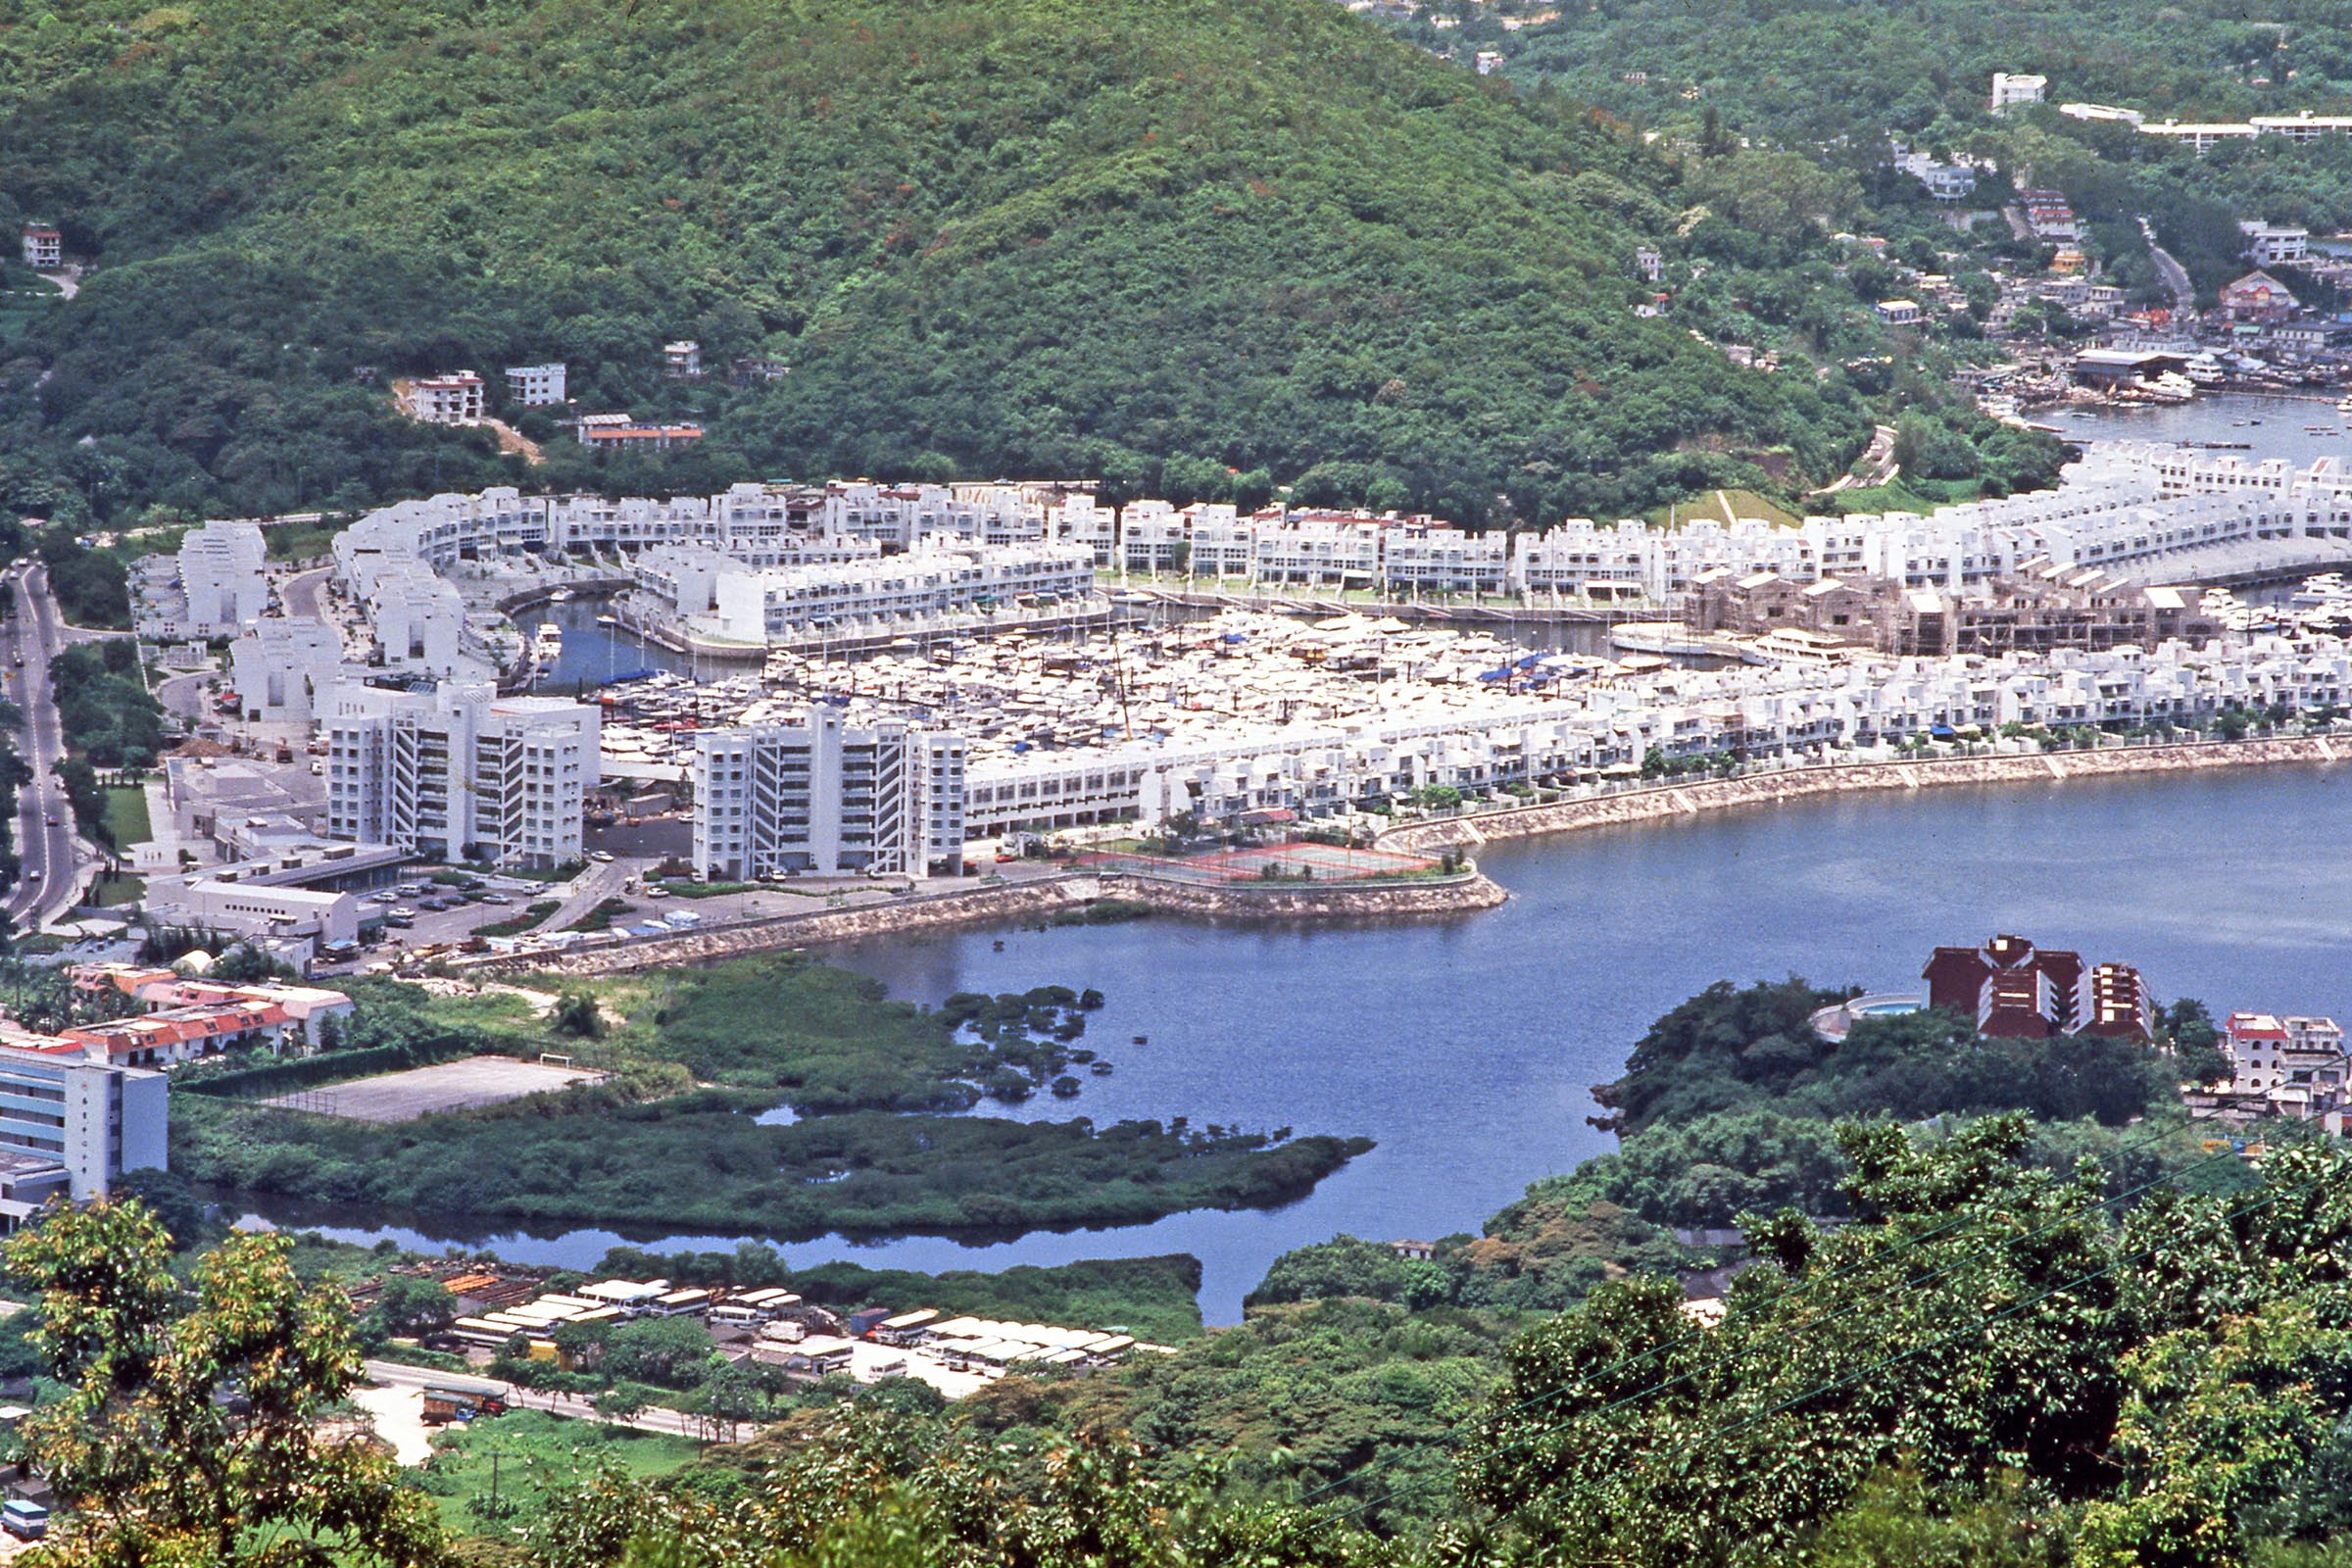 Marina Cove